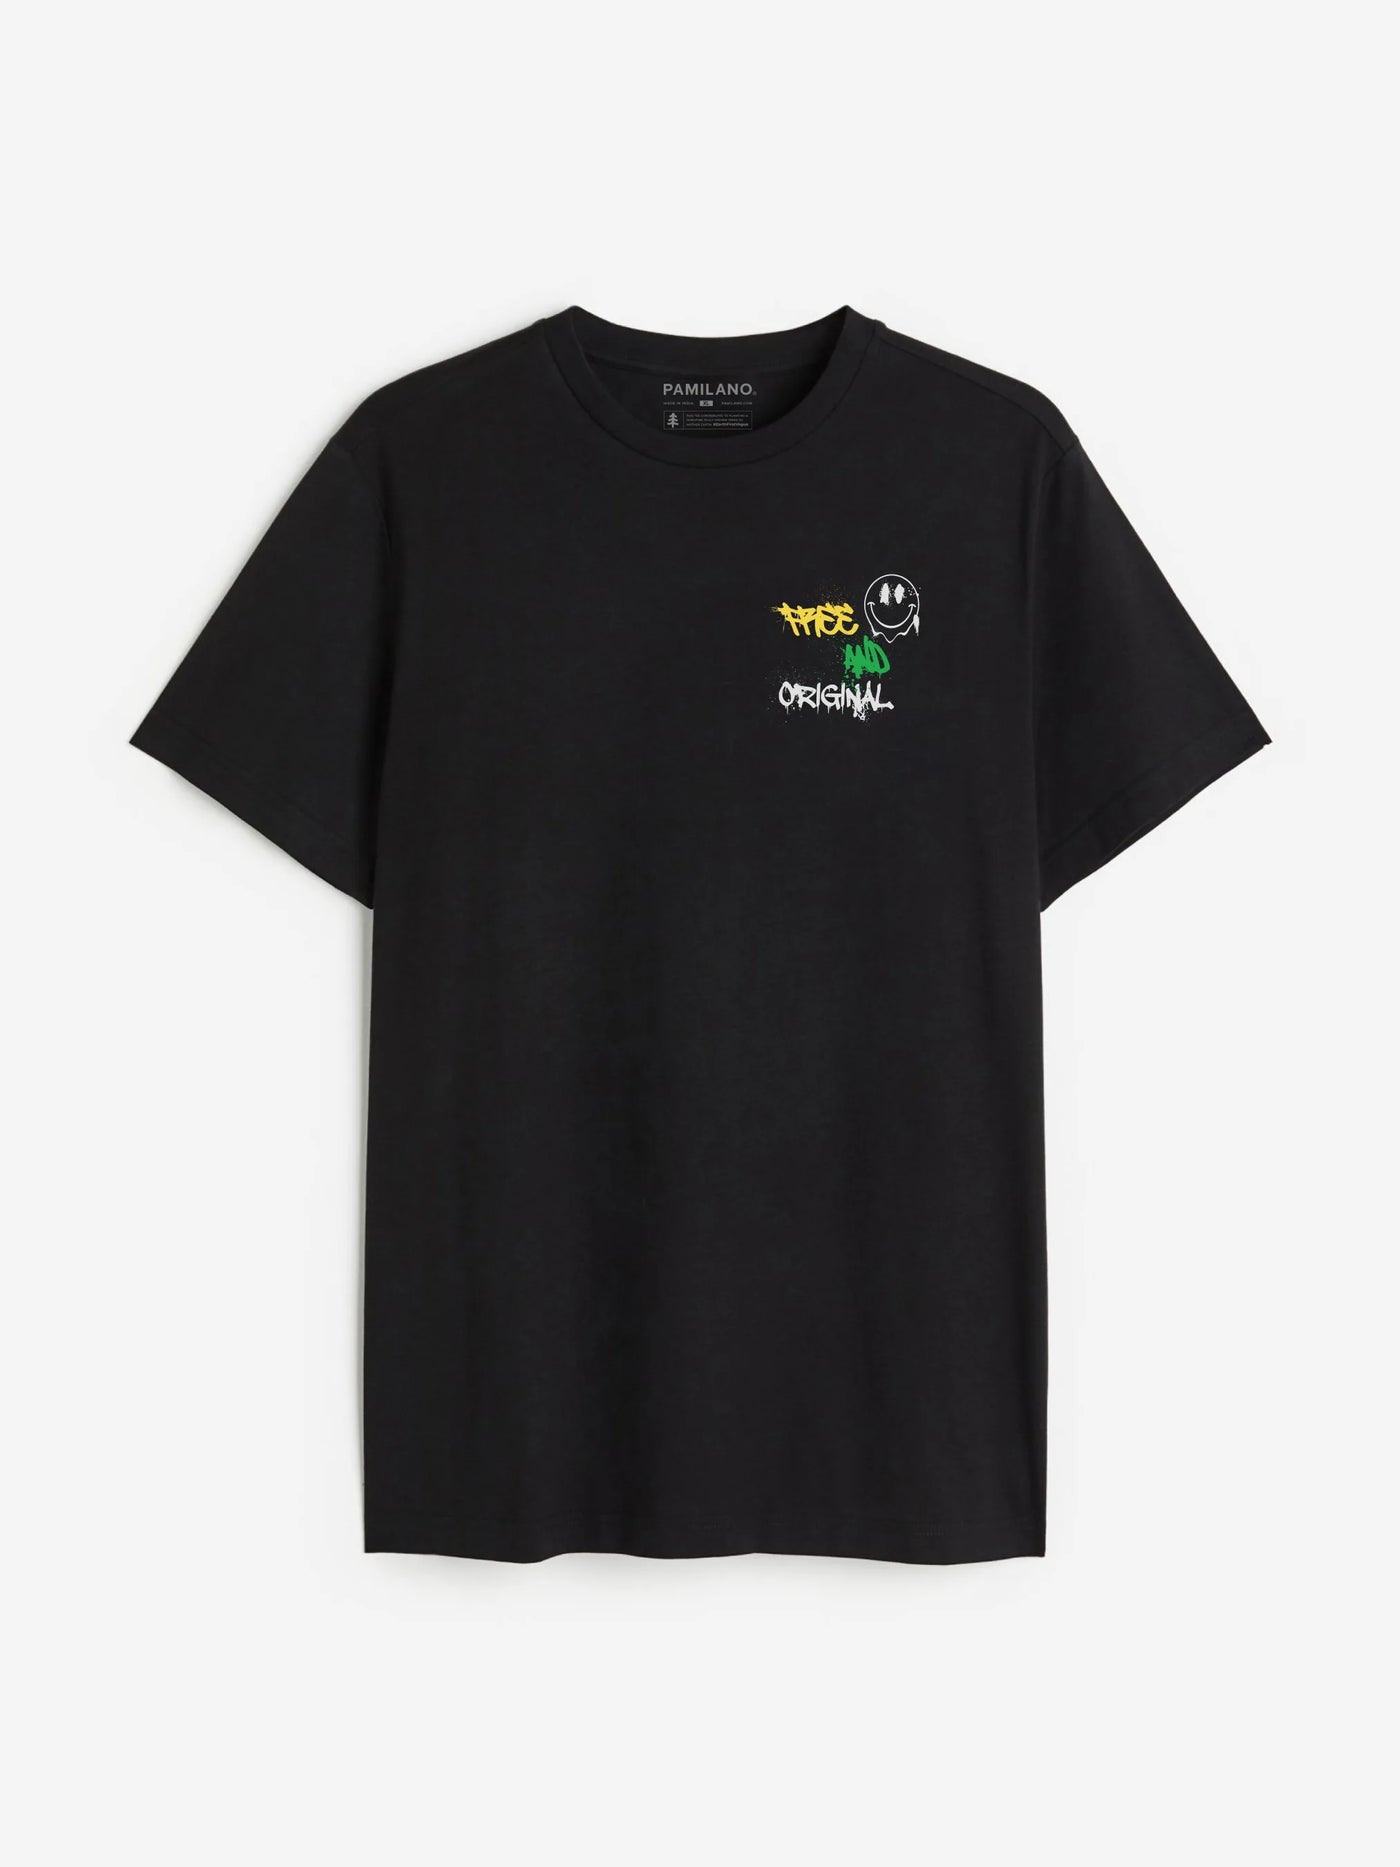 Free and Original - Unisex T-Shirt